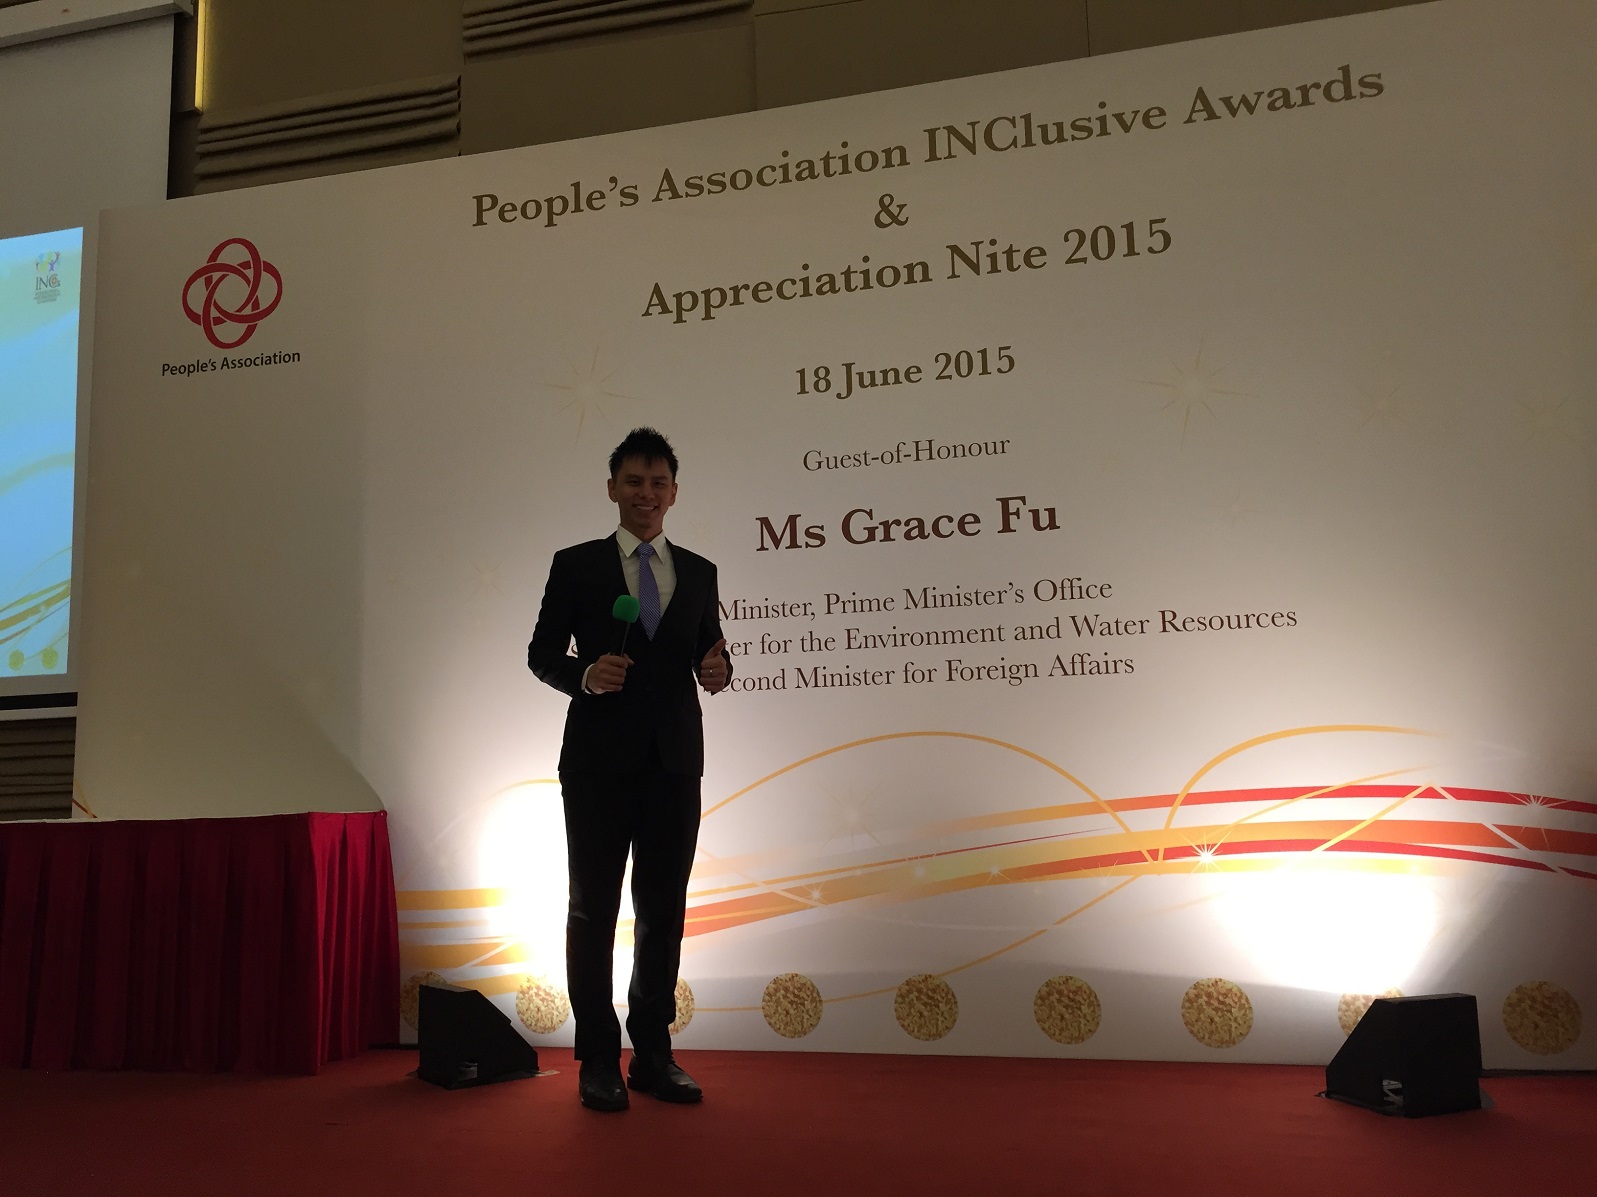 Emcee Singapore Lester Leo - People's Association INClusive Awards Appreciation Nite 2015